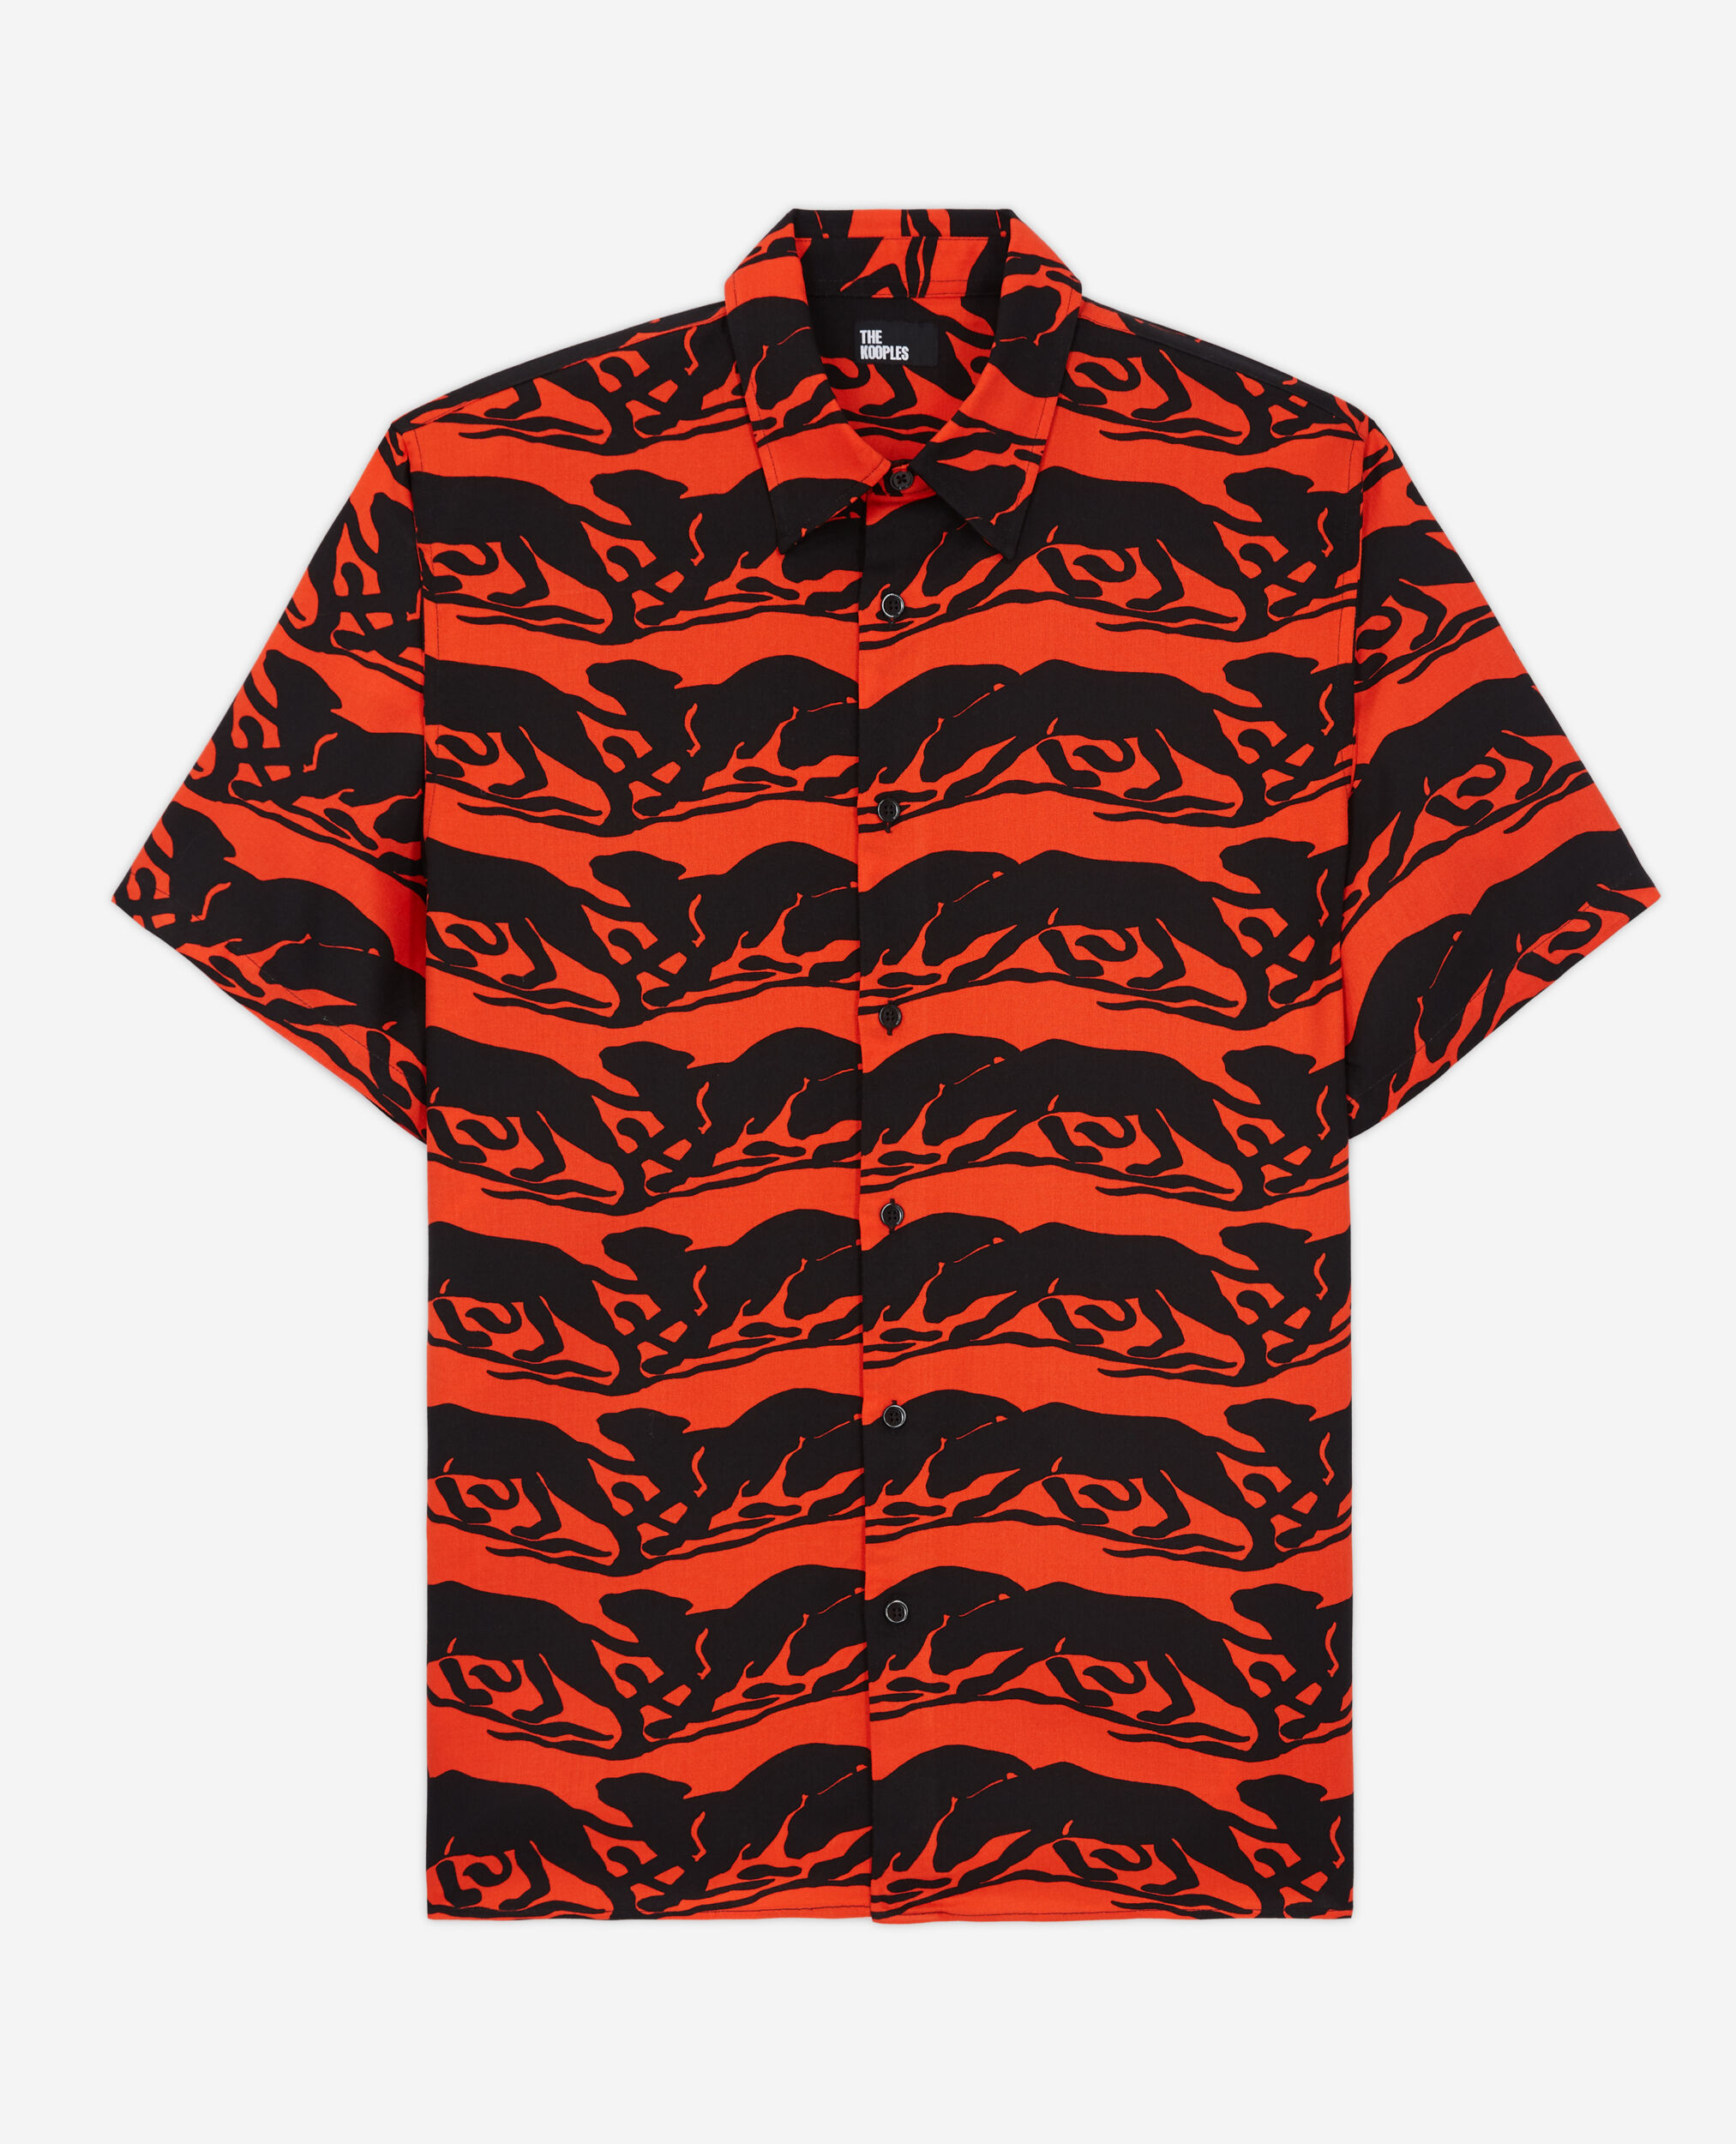 Camisa informal pantera, BLACK - RED, hi-res image number null